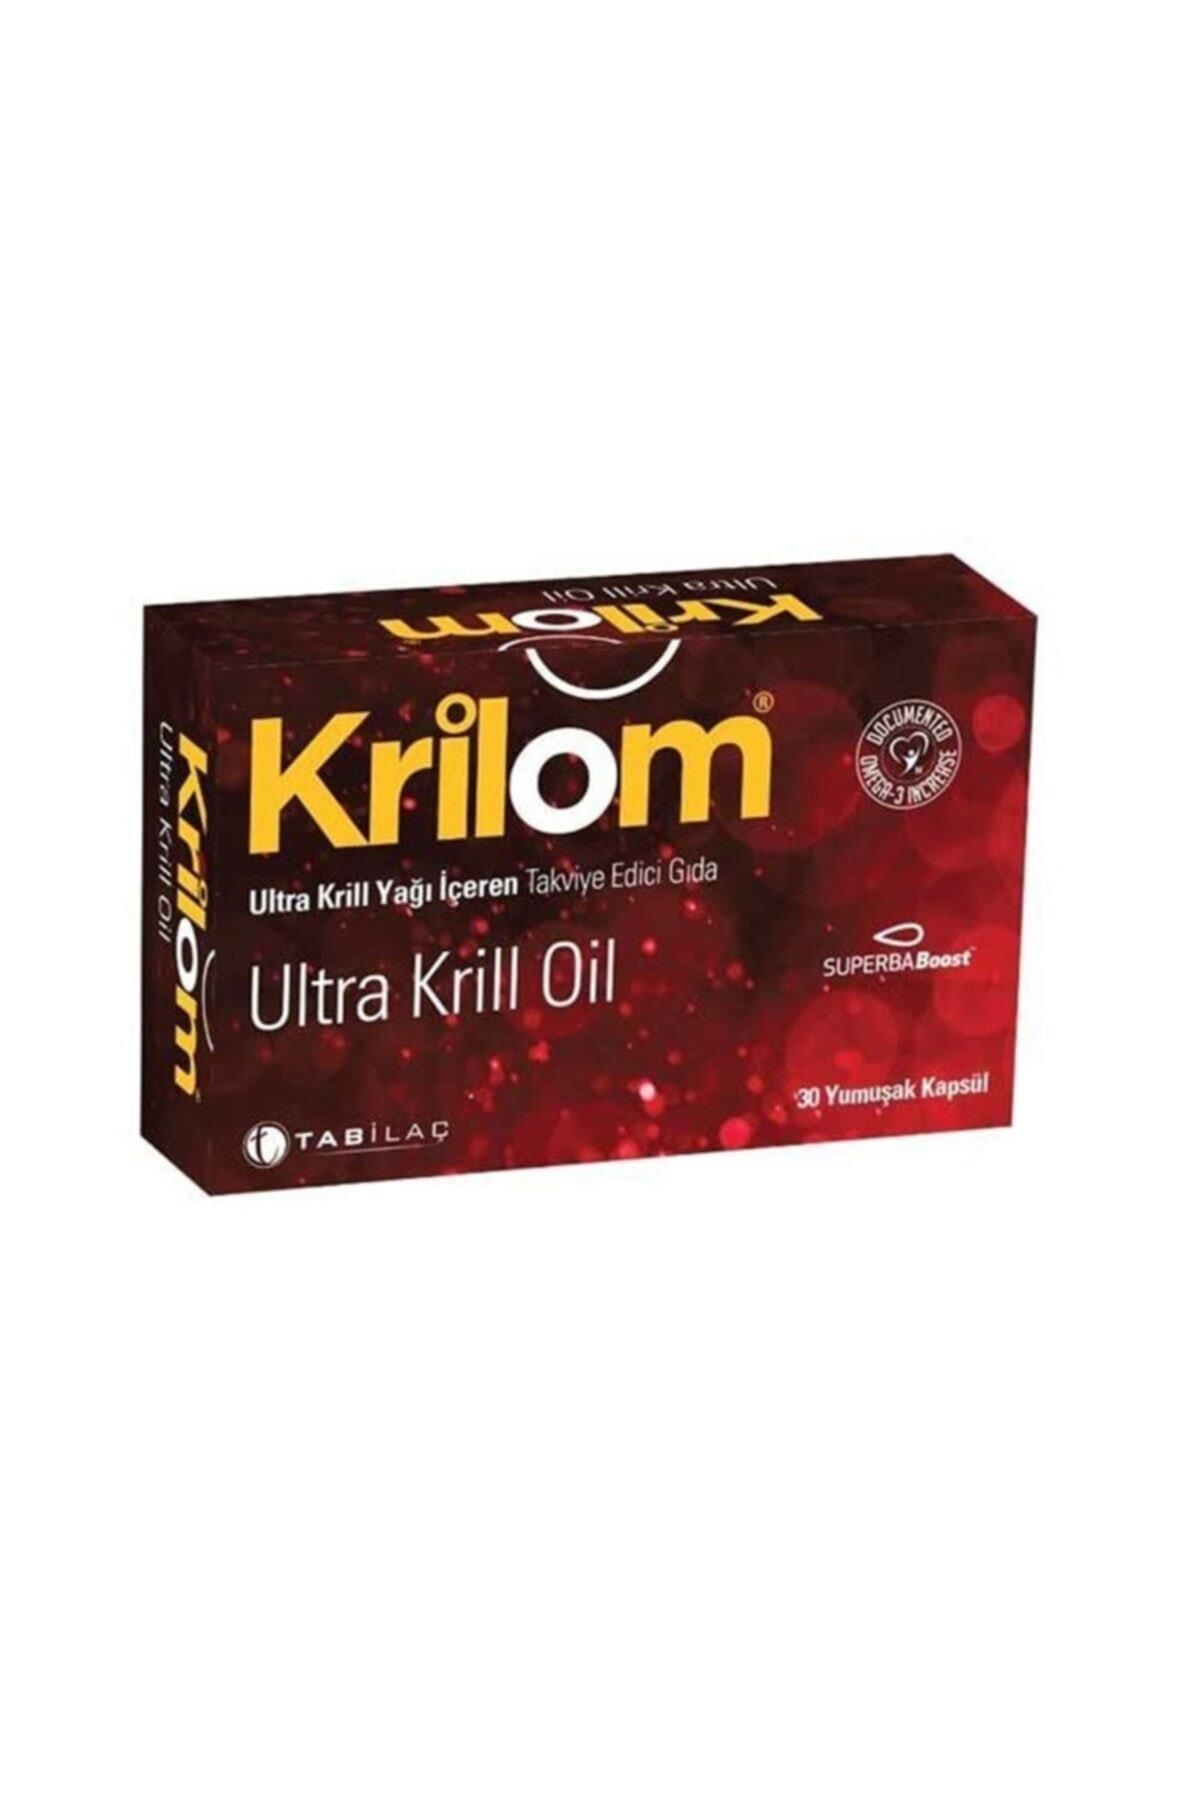 Krilom Ultra Krill Oil 30 Yumuşak kapsül